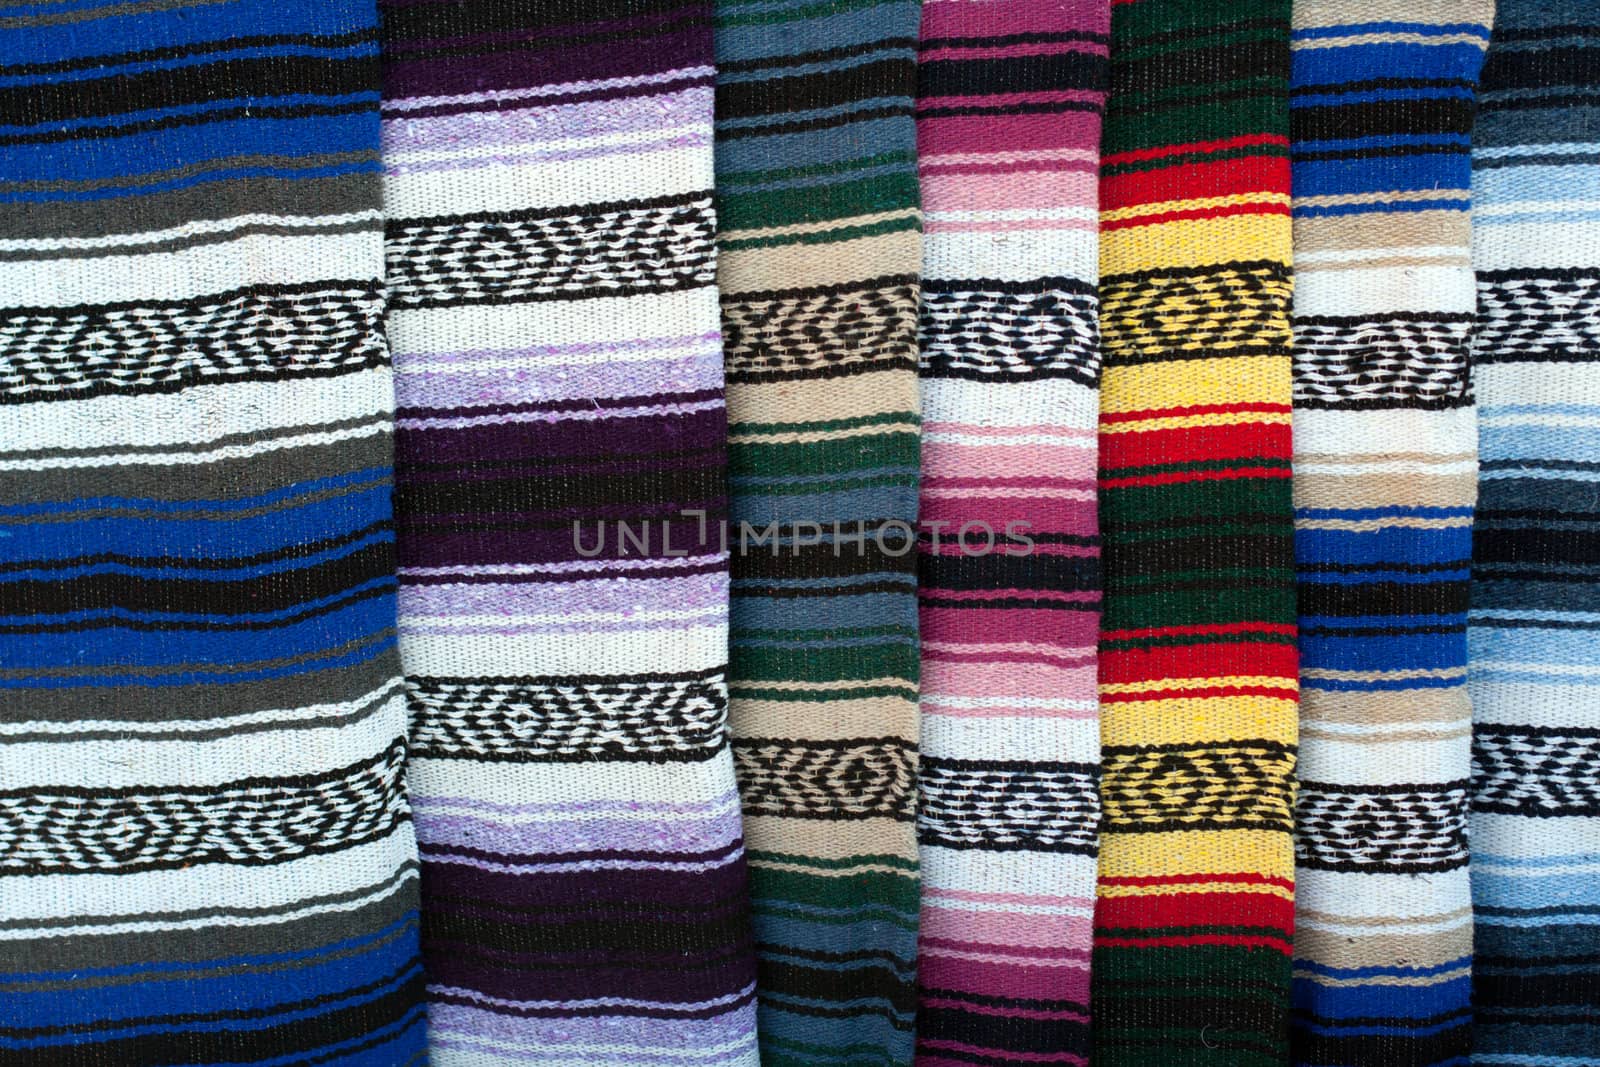 Colorful Indian rug display by GunterNezhoda